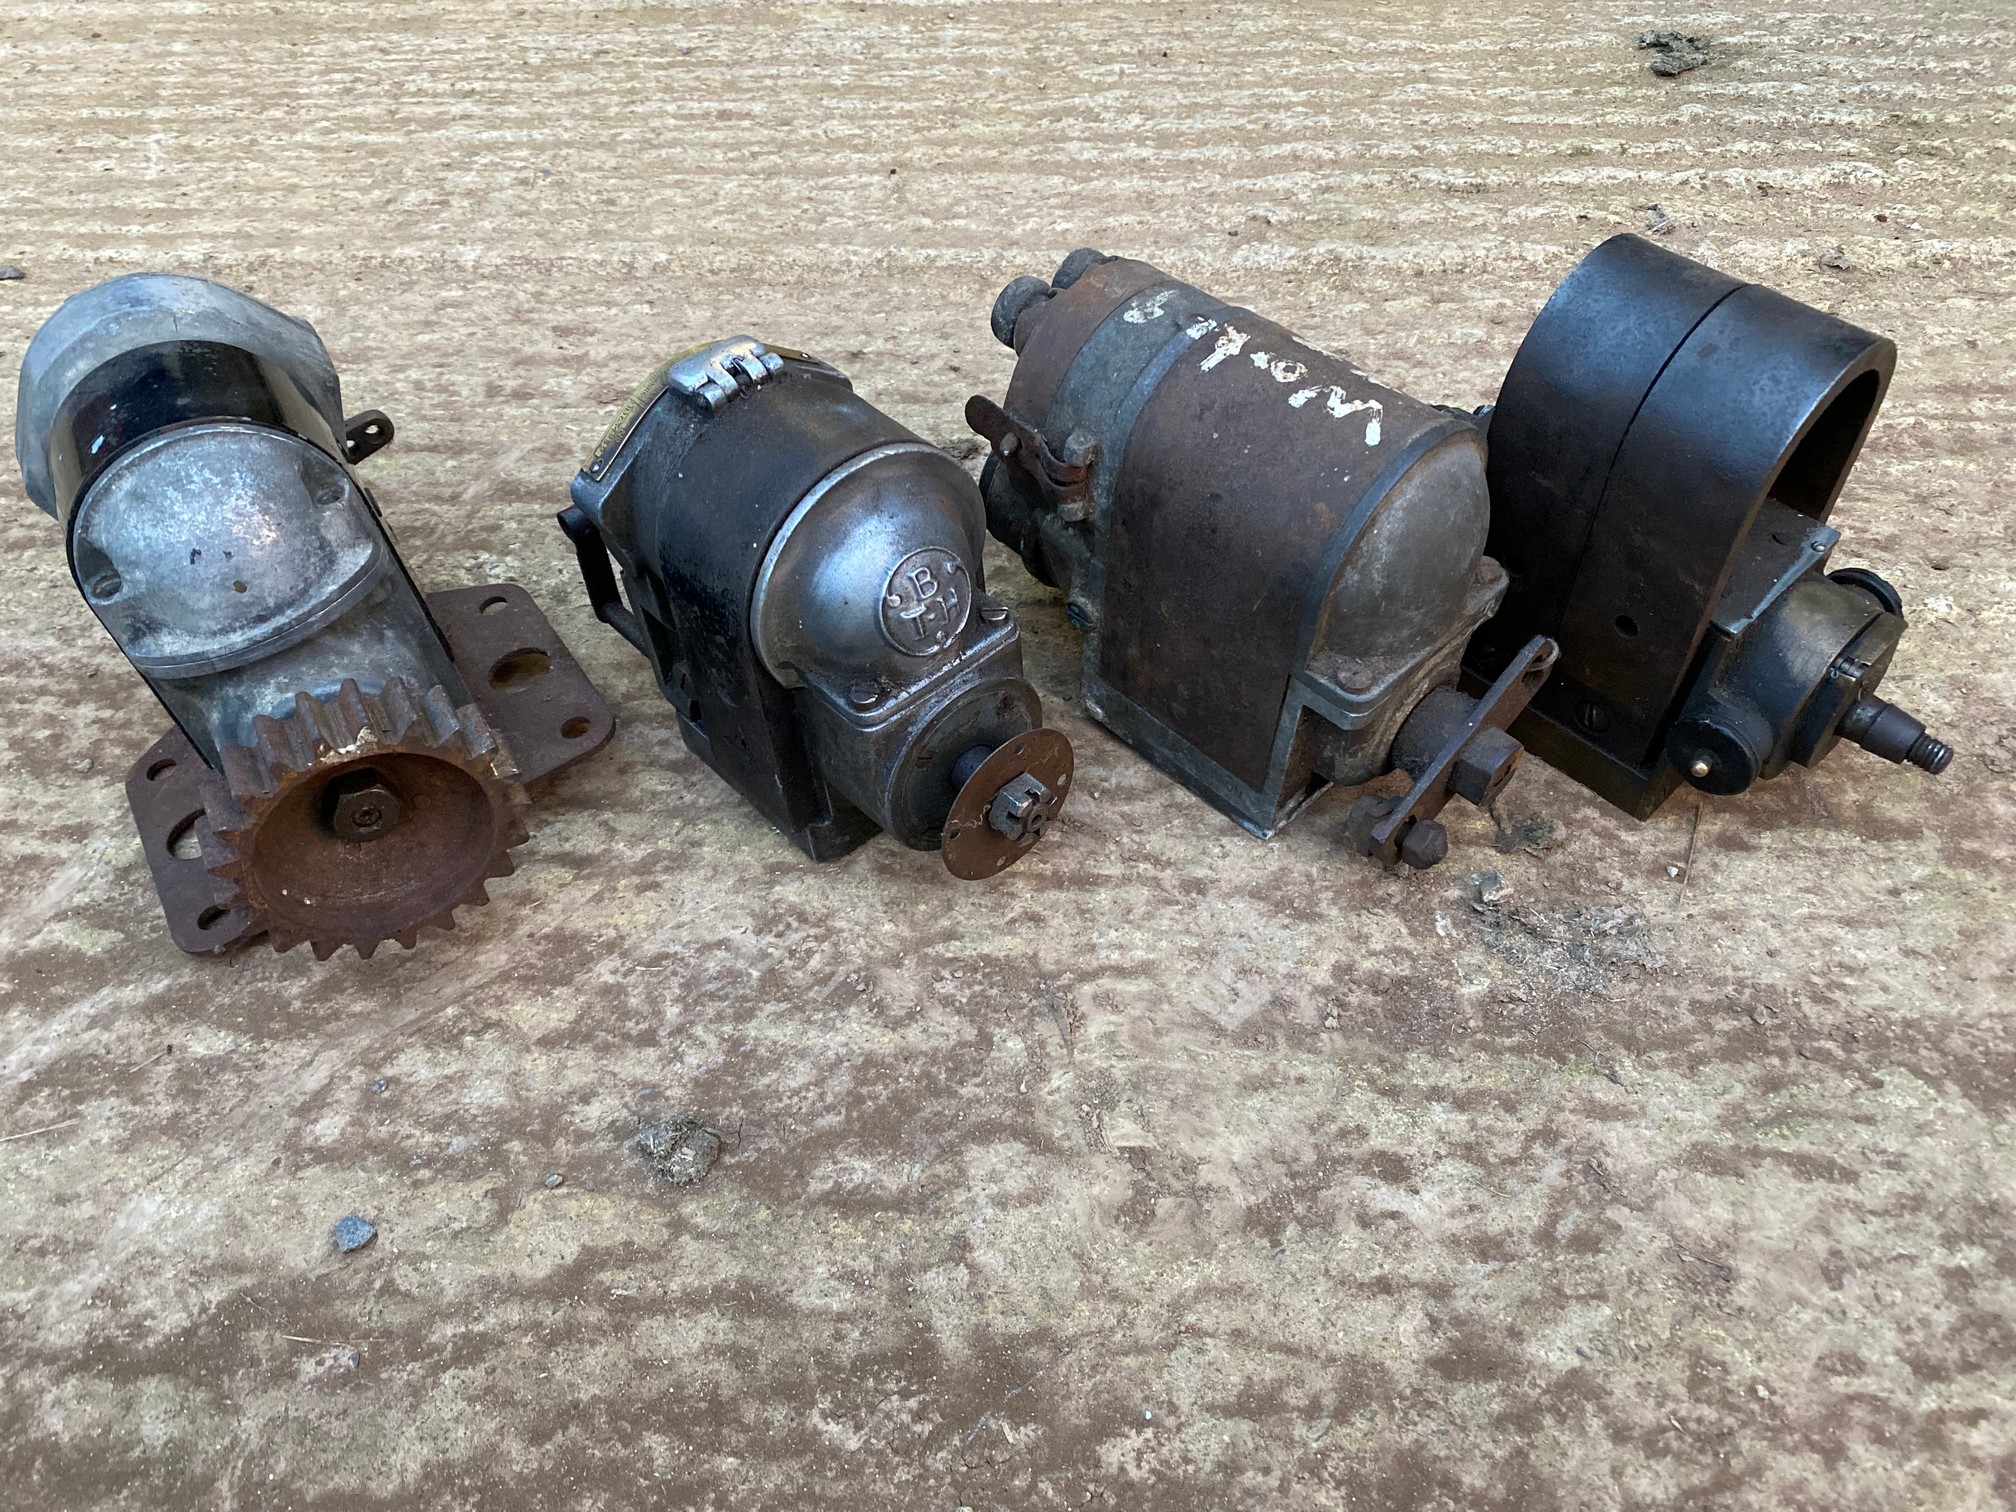 Four magnetos for restoration, an ML Type G4, a BTH, a Fellows ES4 and a Bosch type D2.